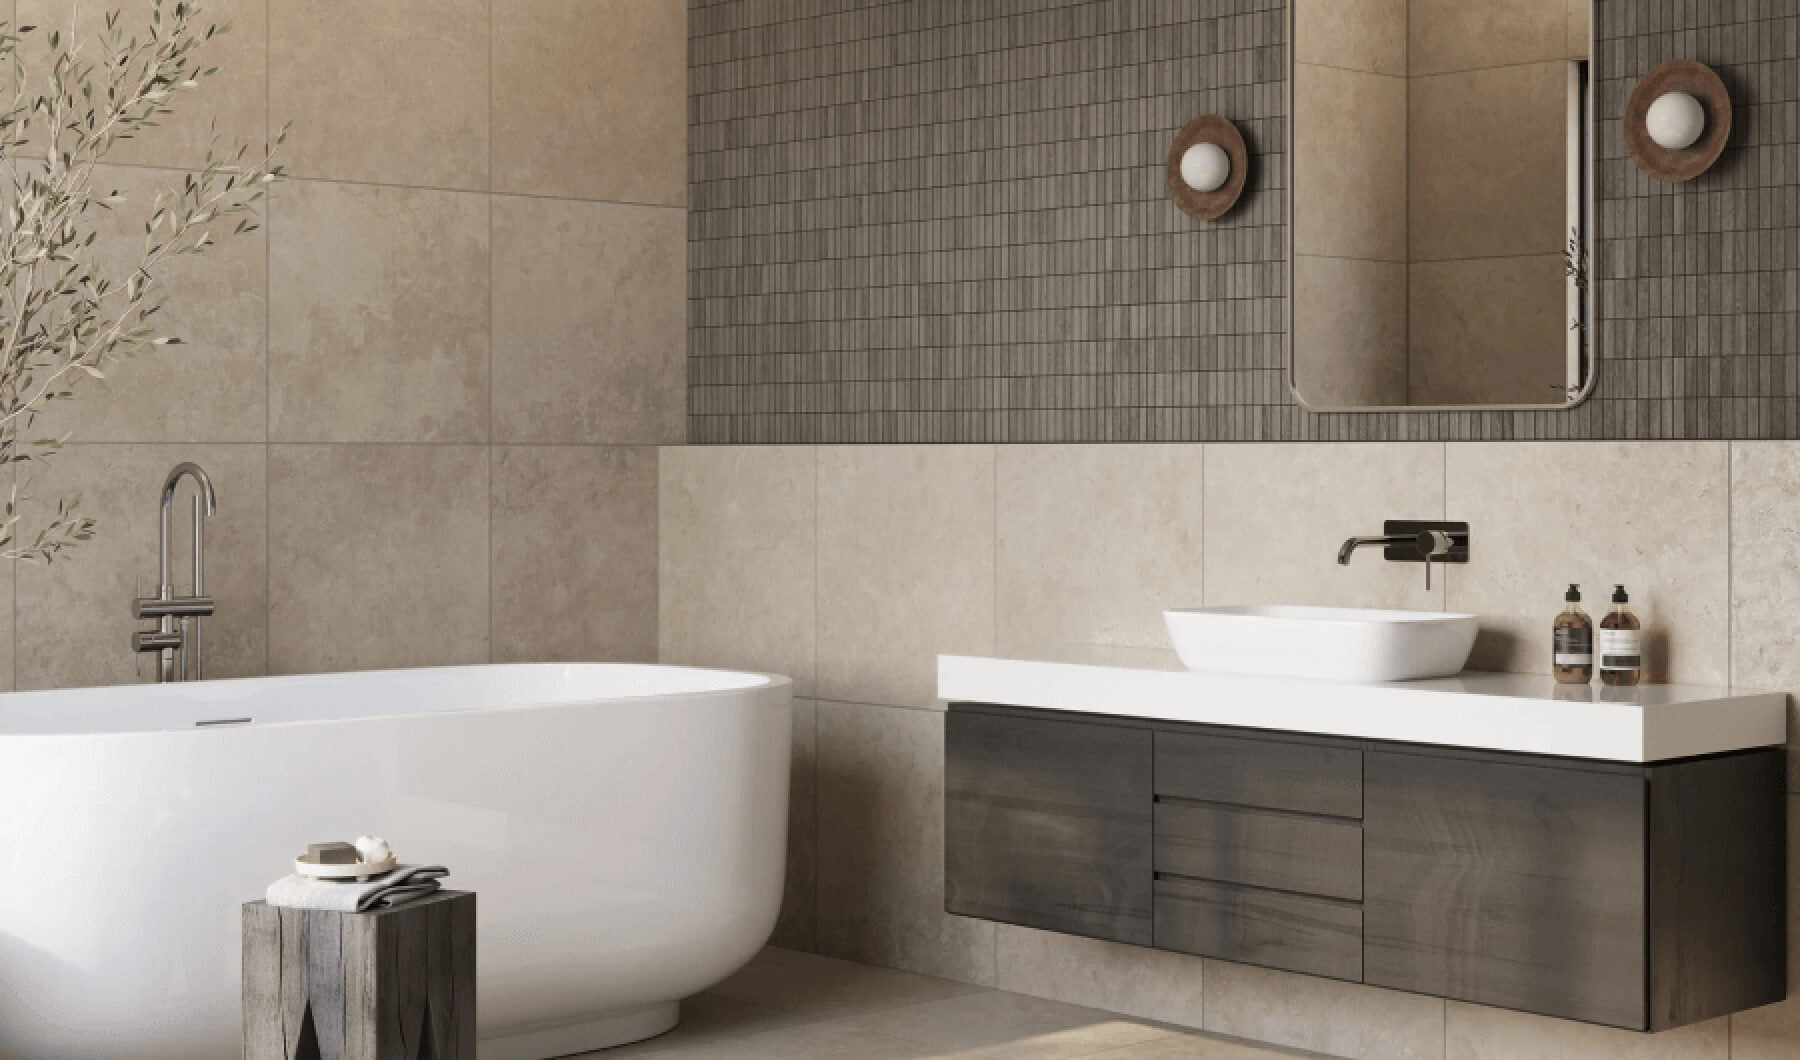 Minimalist beige bathroom wall meets contrasting textured tile accent